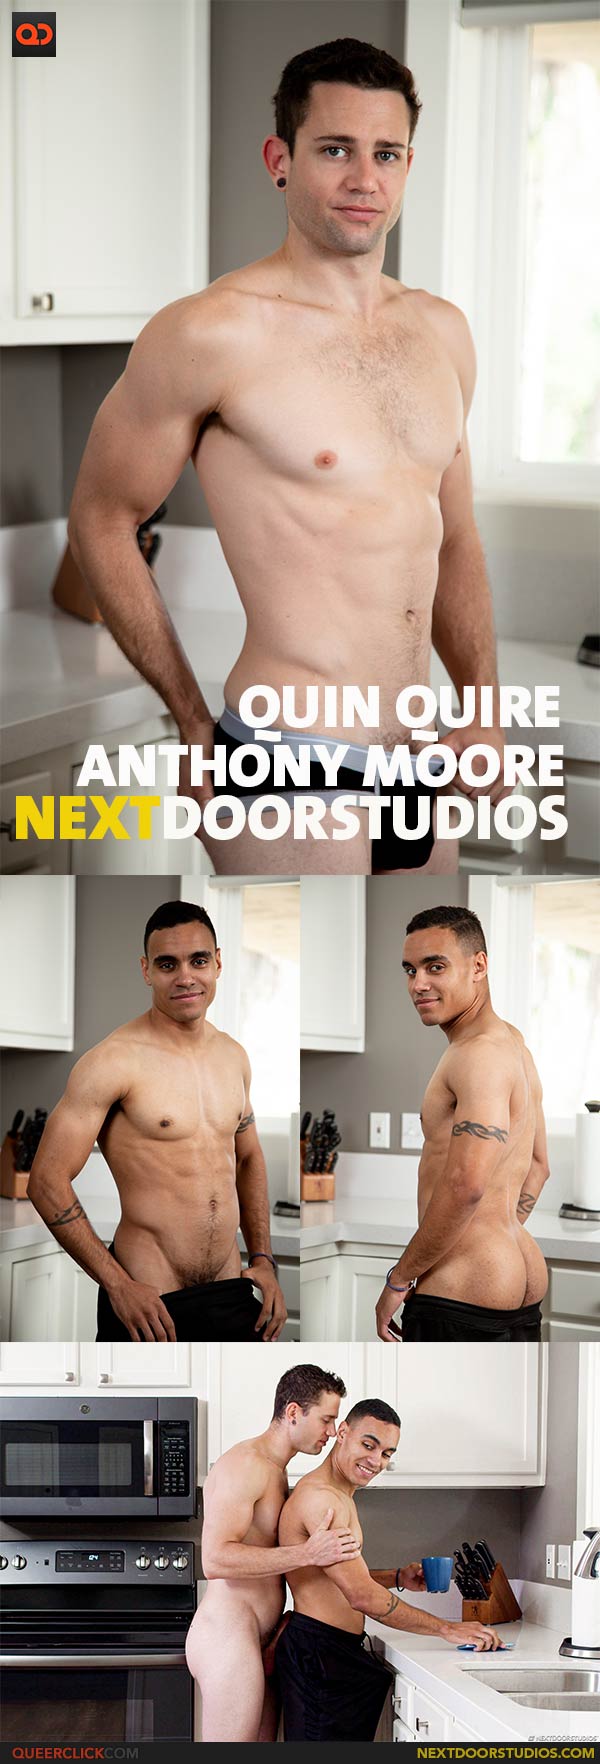 Next Door Studios:  Quin Quire and Anthony Moore